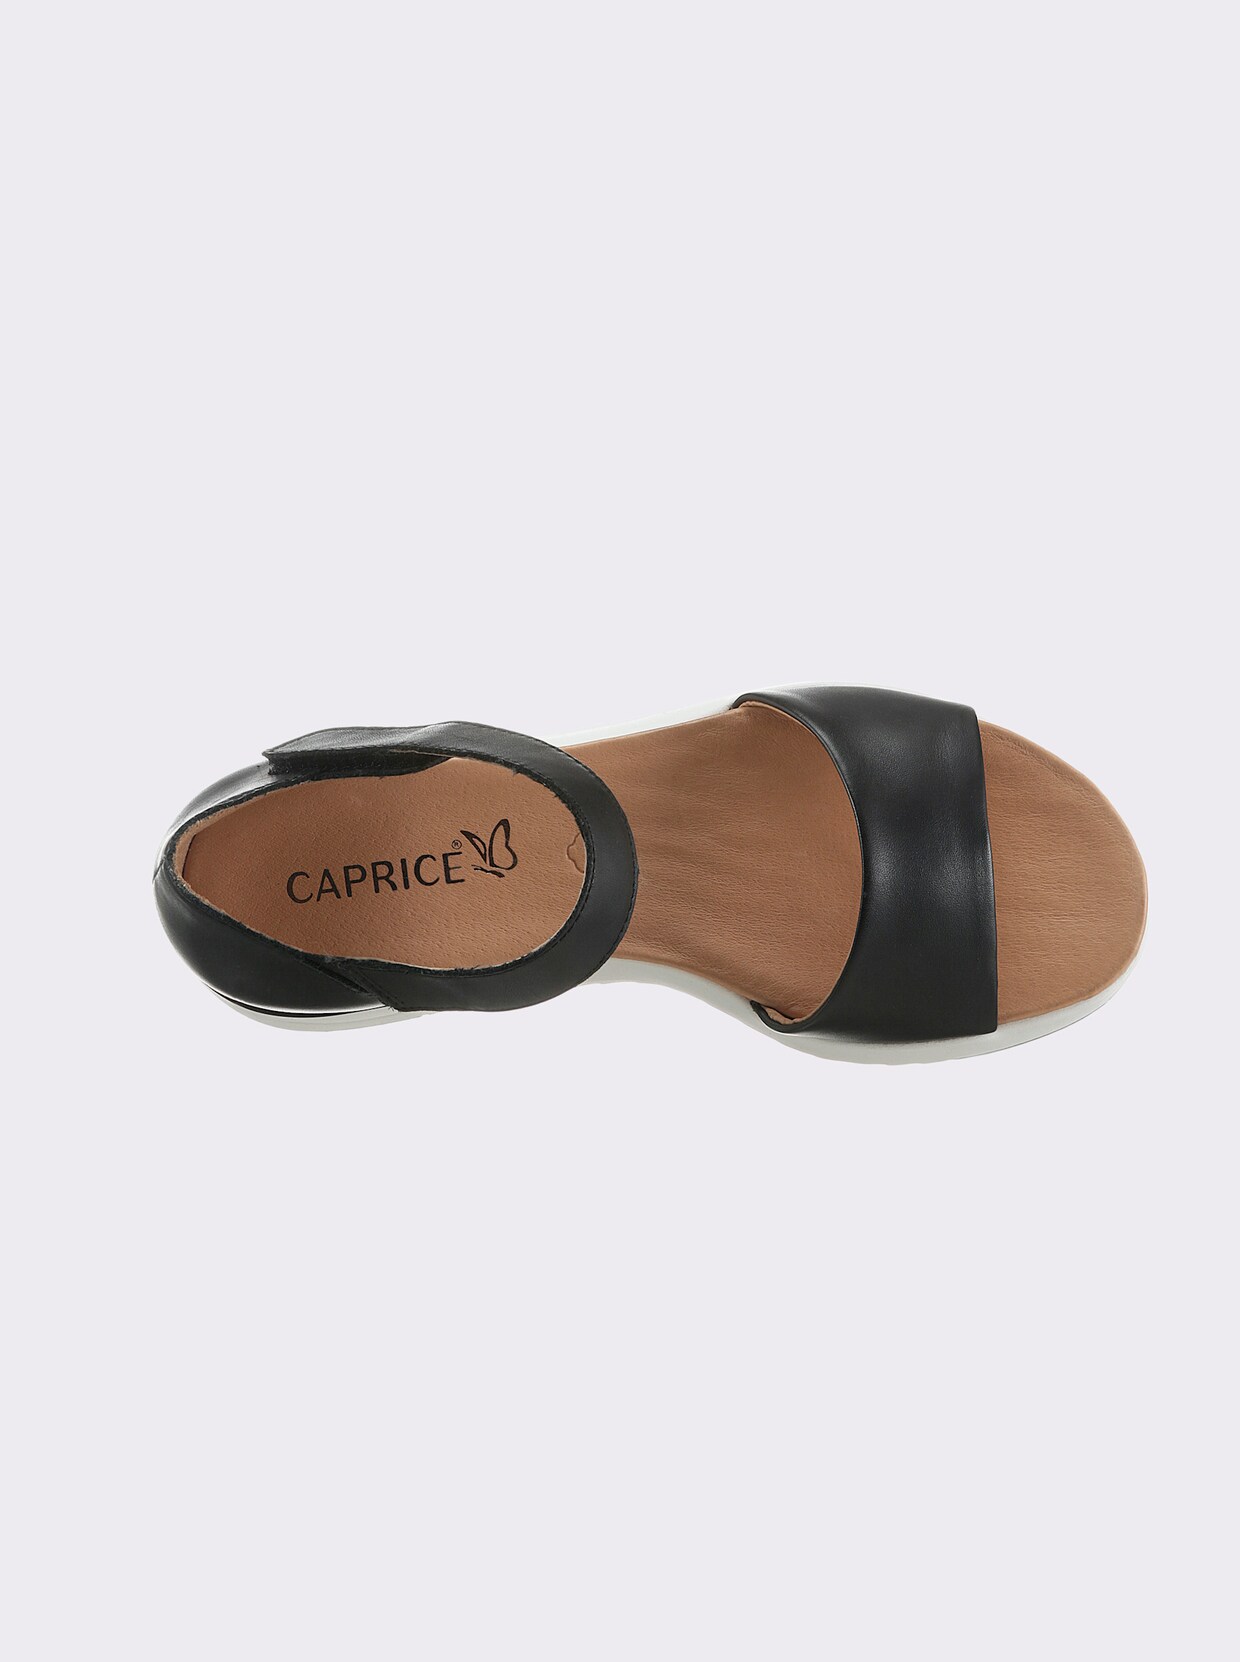 Caprice Sandalette - schwarz